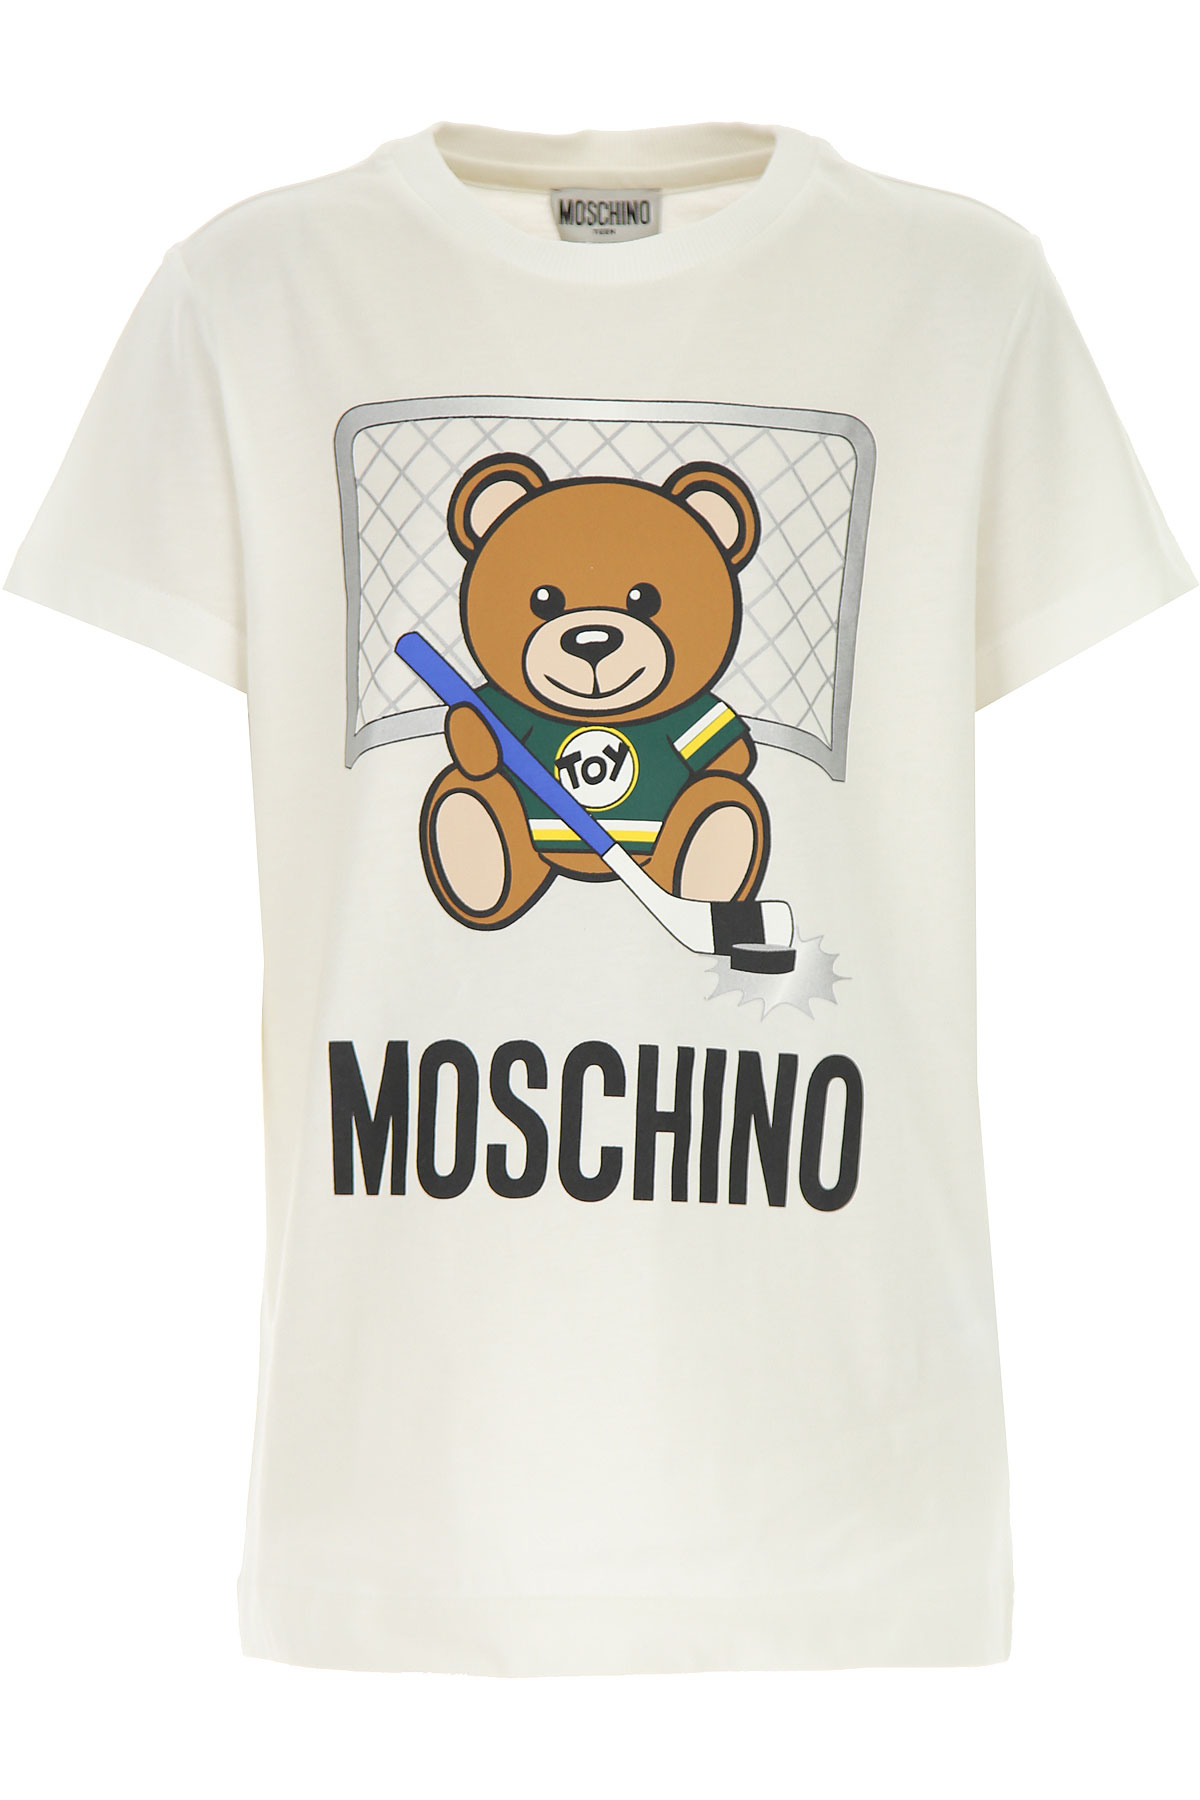 Moschino Kinder T-Shirt für Jungen Günstig im Sale, Weiss, Baumwolle, 2017, 10Y 12Y 4Y 5Y 6Y 8Y